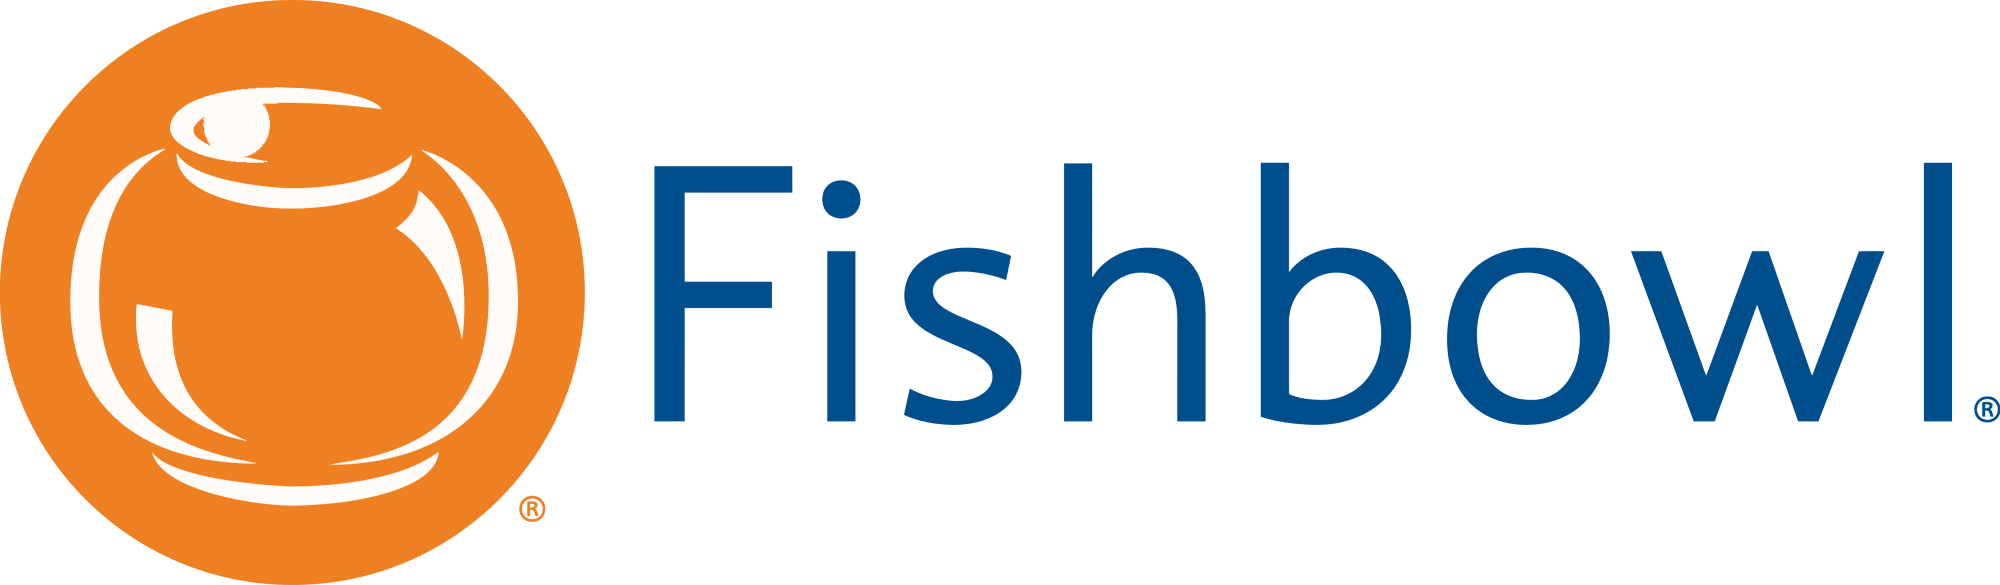 IMCO manufacturing software fishbowl inventory partner logo